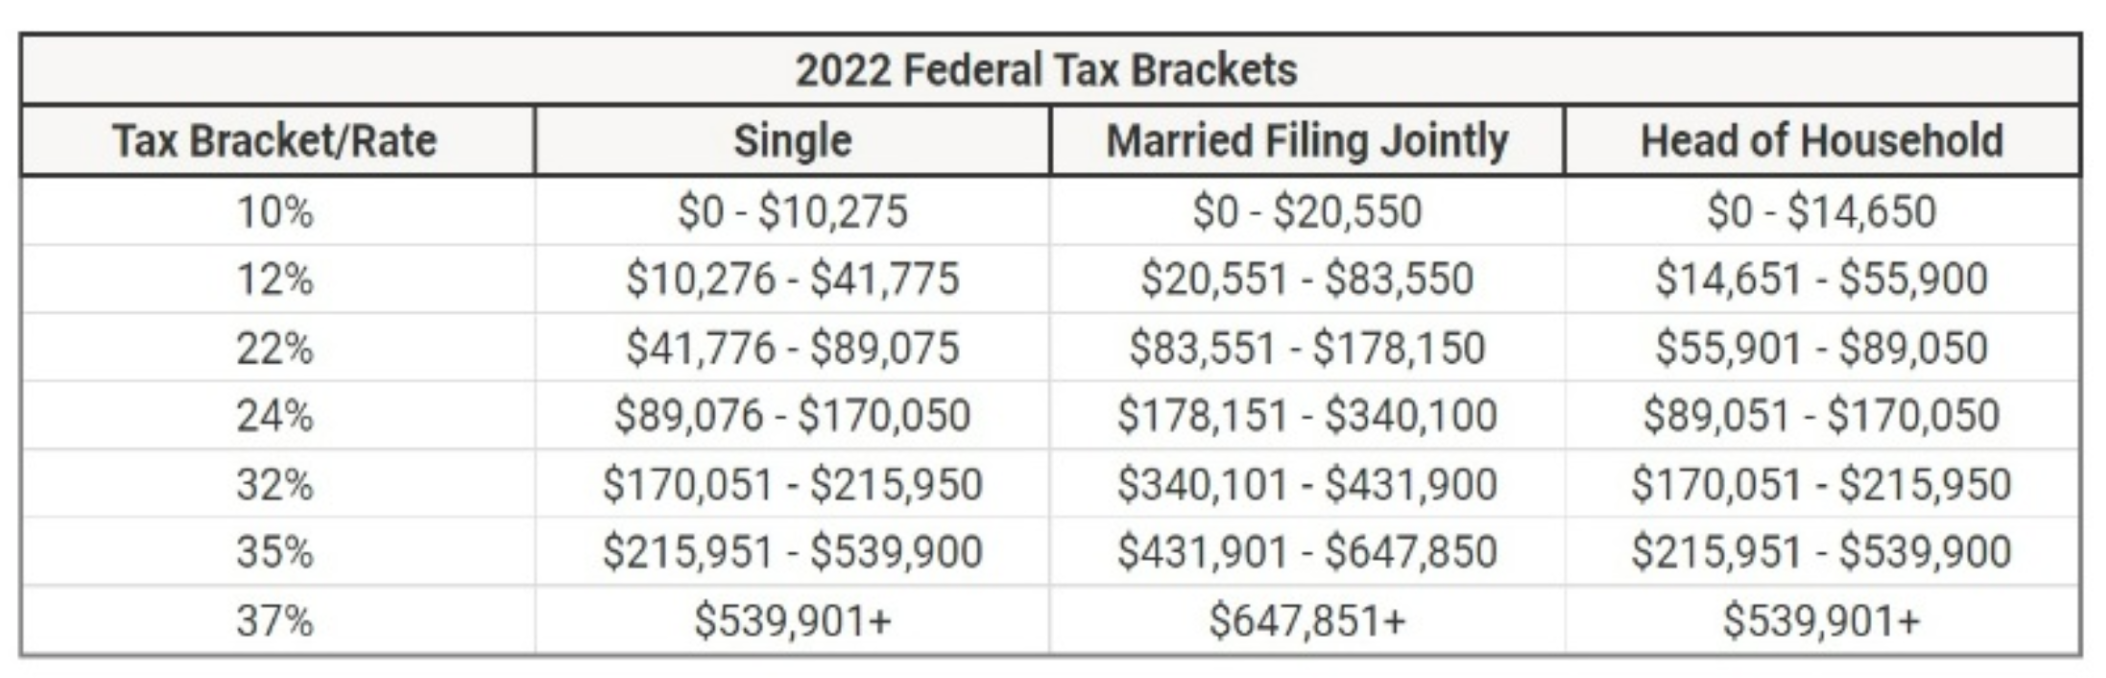 2022 Federal Tax Brackets